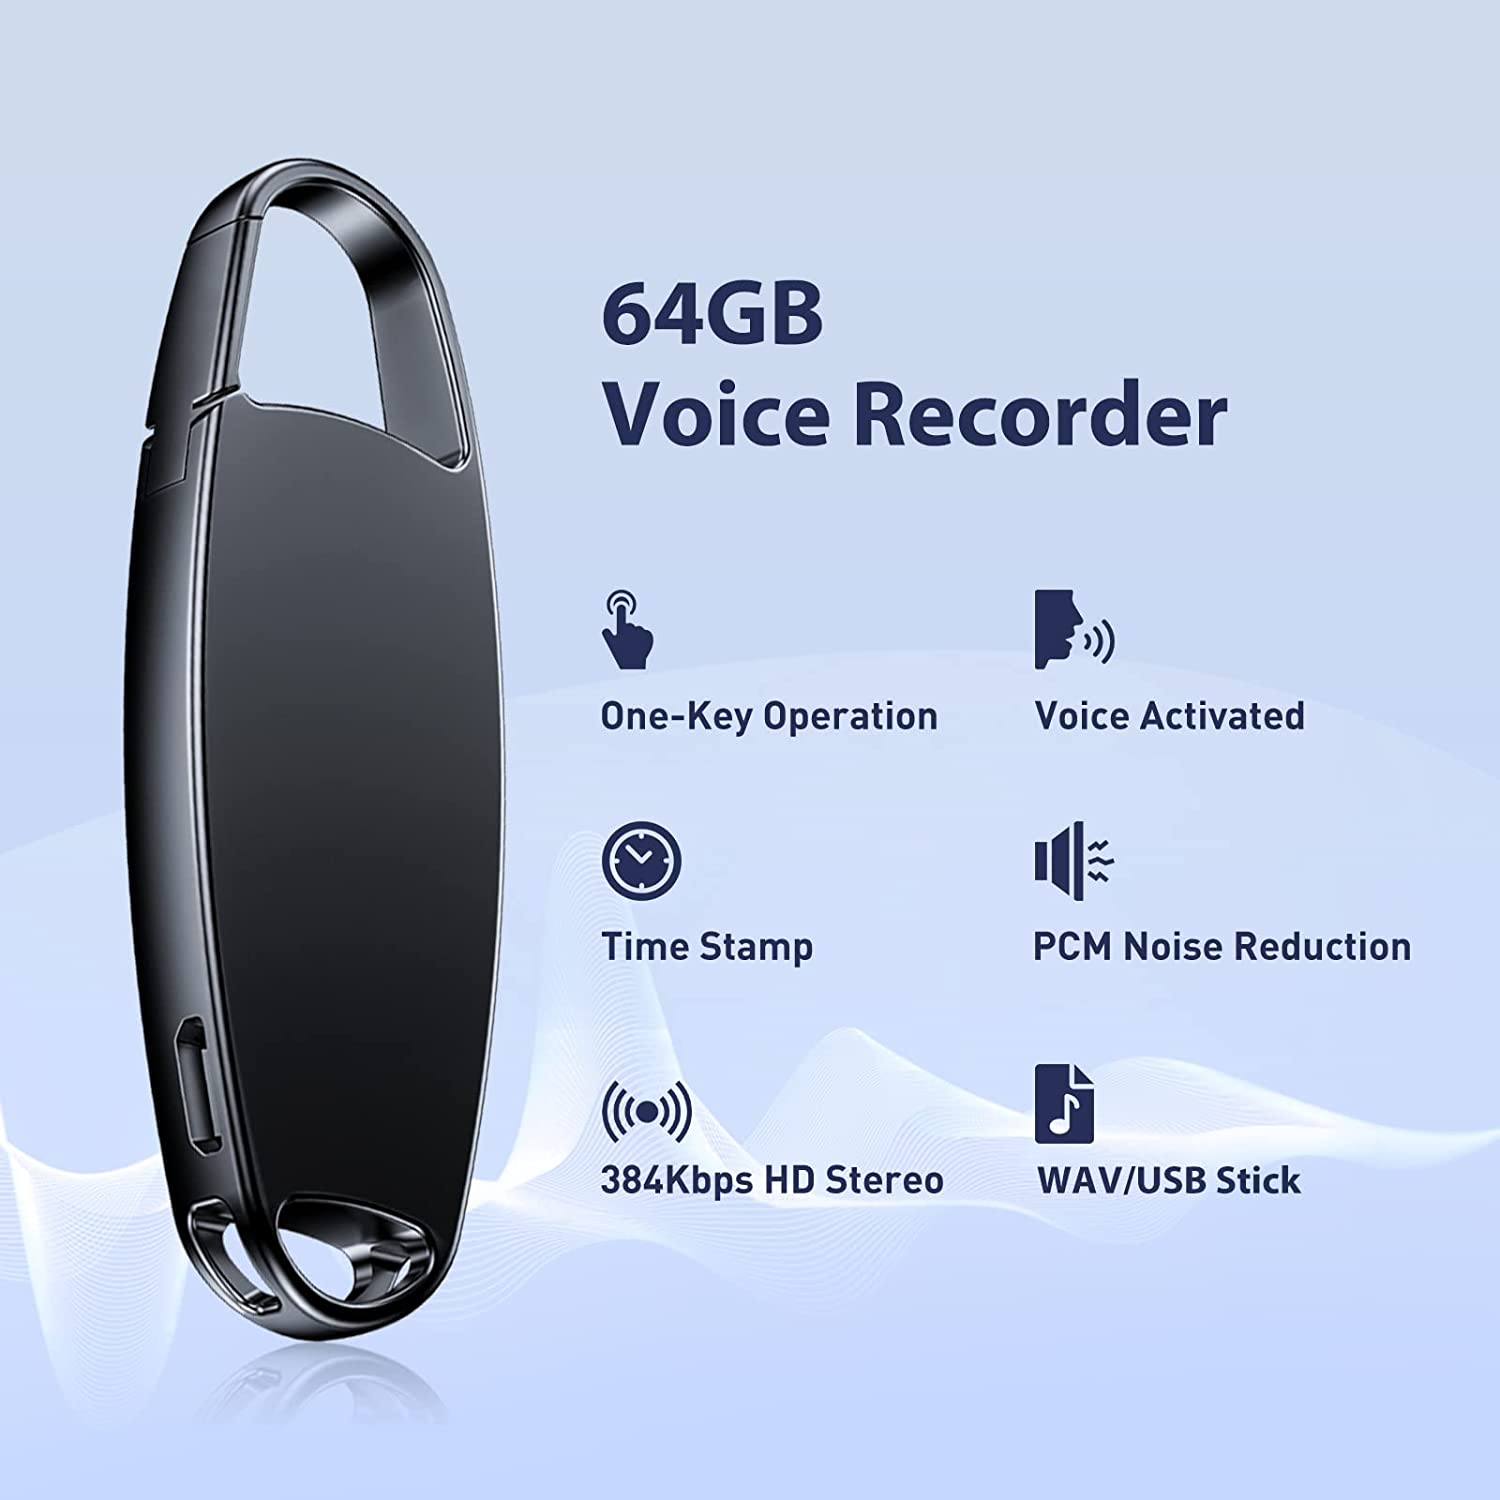 64GB Voice Recorder, Telele Digital Audio Recorder